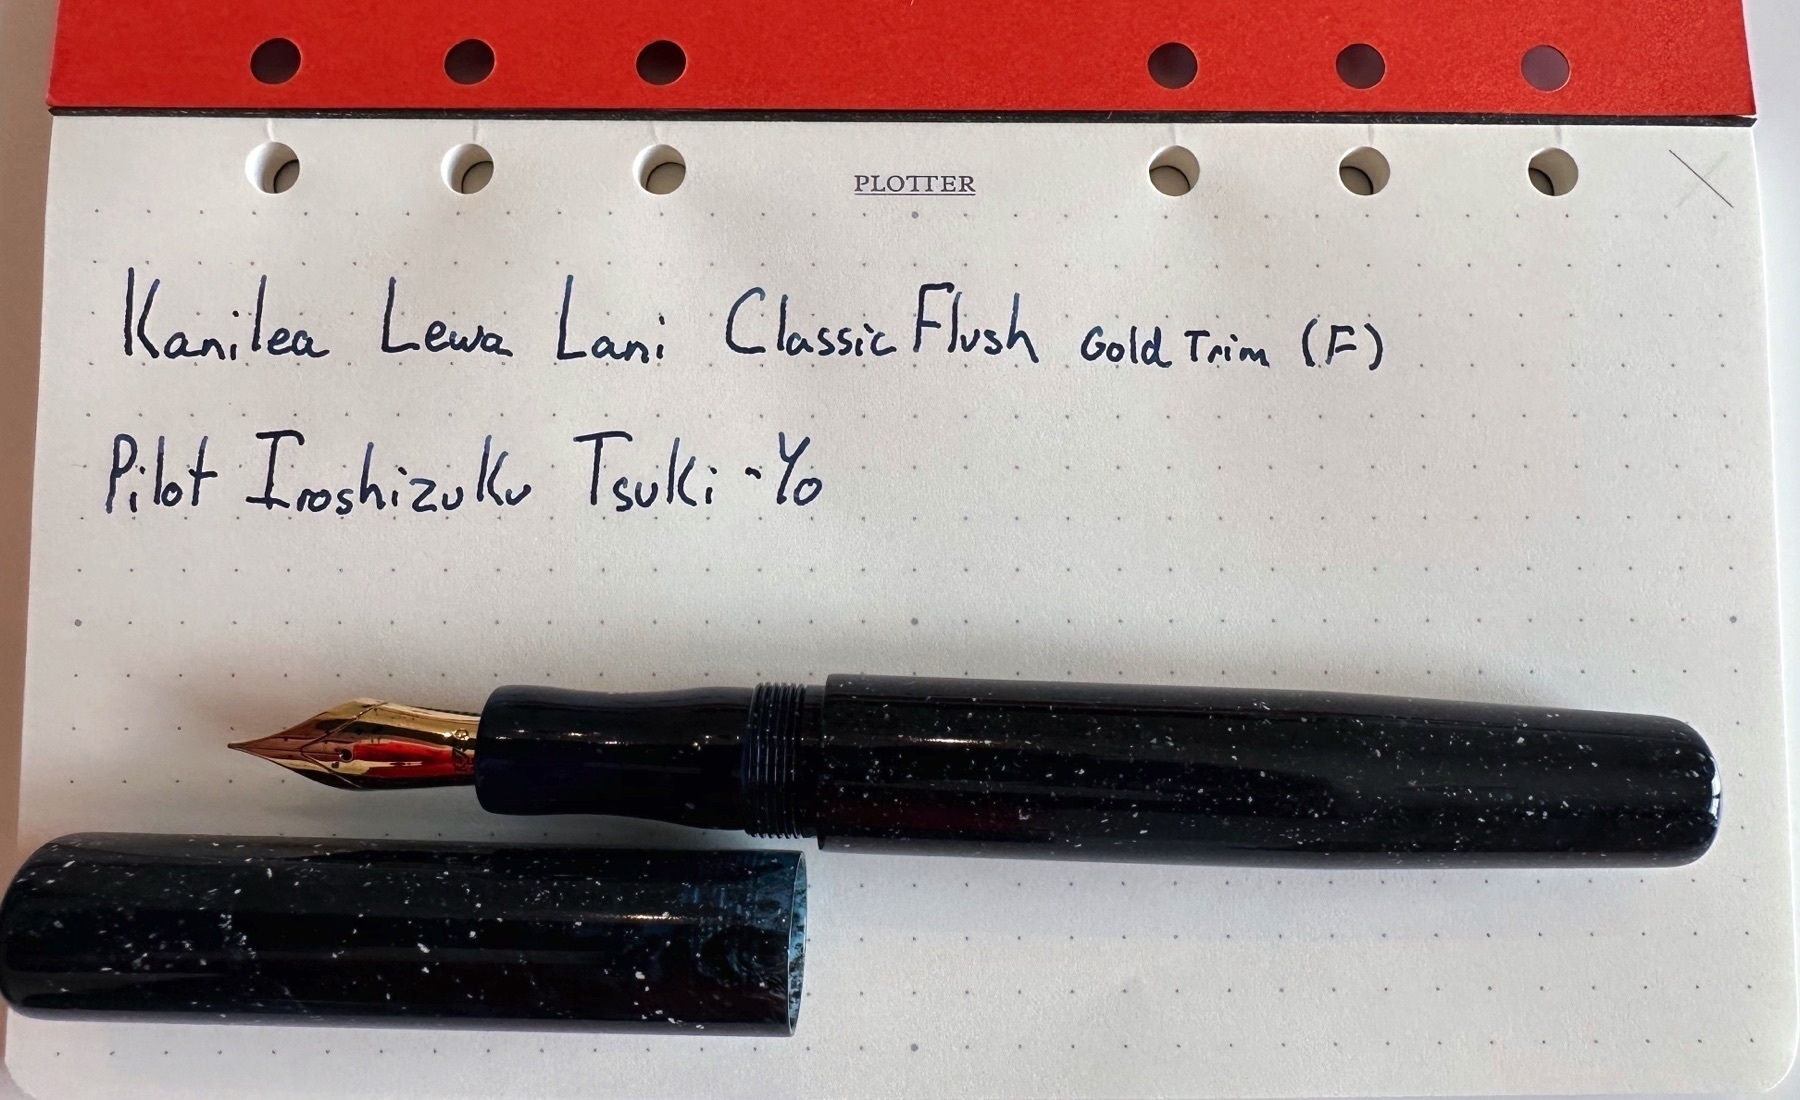 Kanilea Lewa Lani Fountain Pen laying over a sheet of paper that says “Kanliea Lewa Lani Classic Flush, Gold Trim (F), Pilot Iroshizuku Tsuki-yo.”